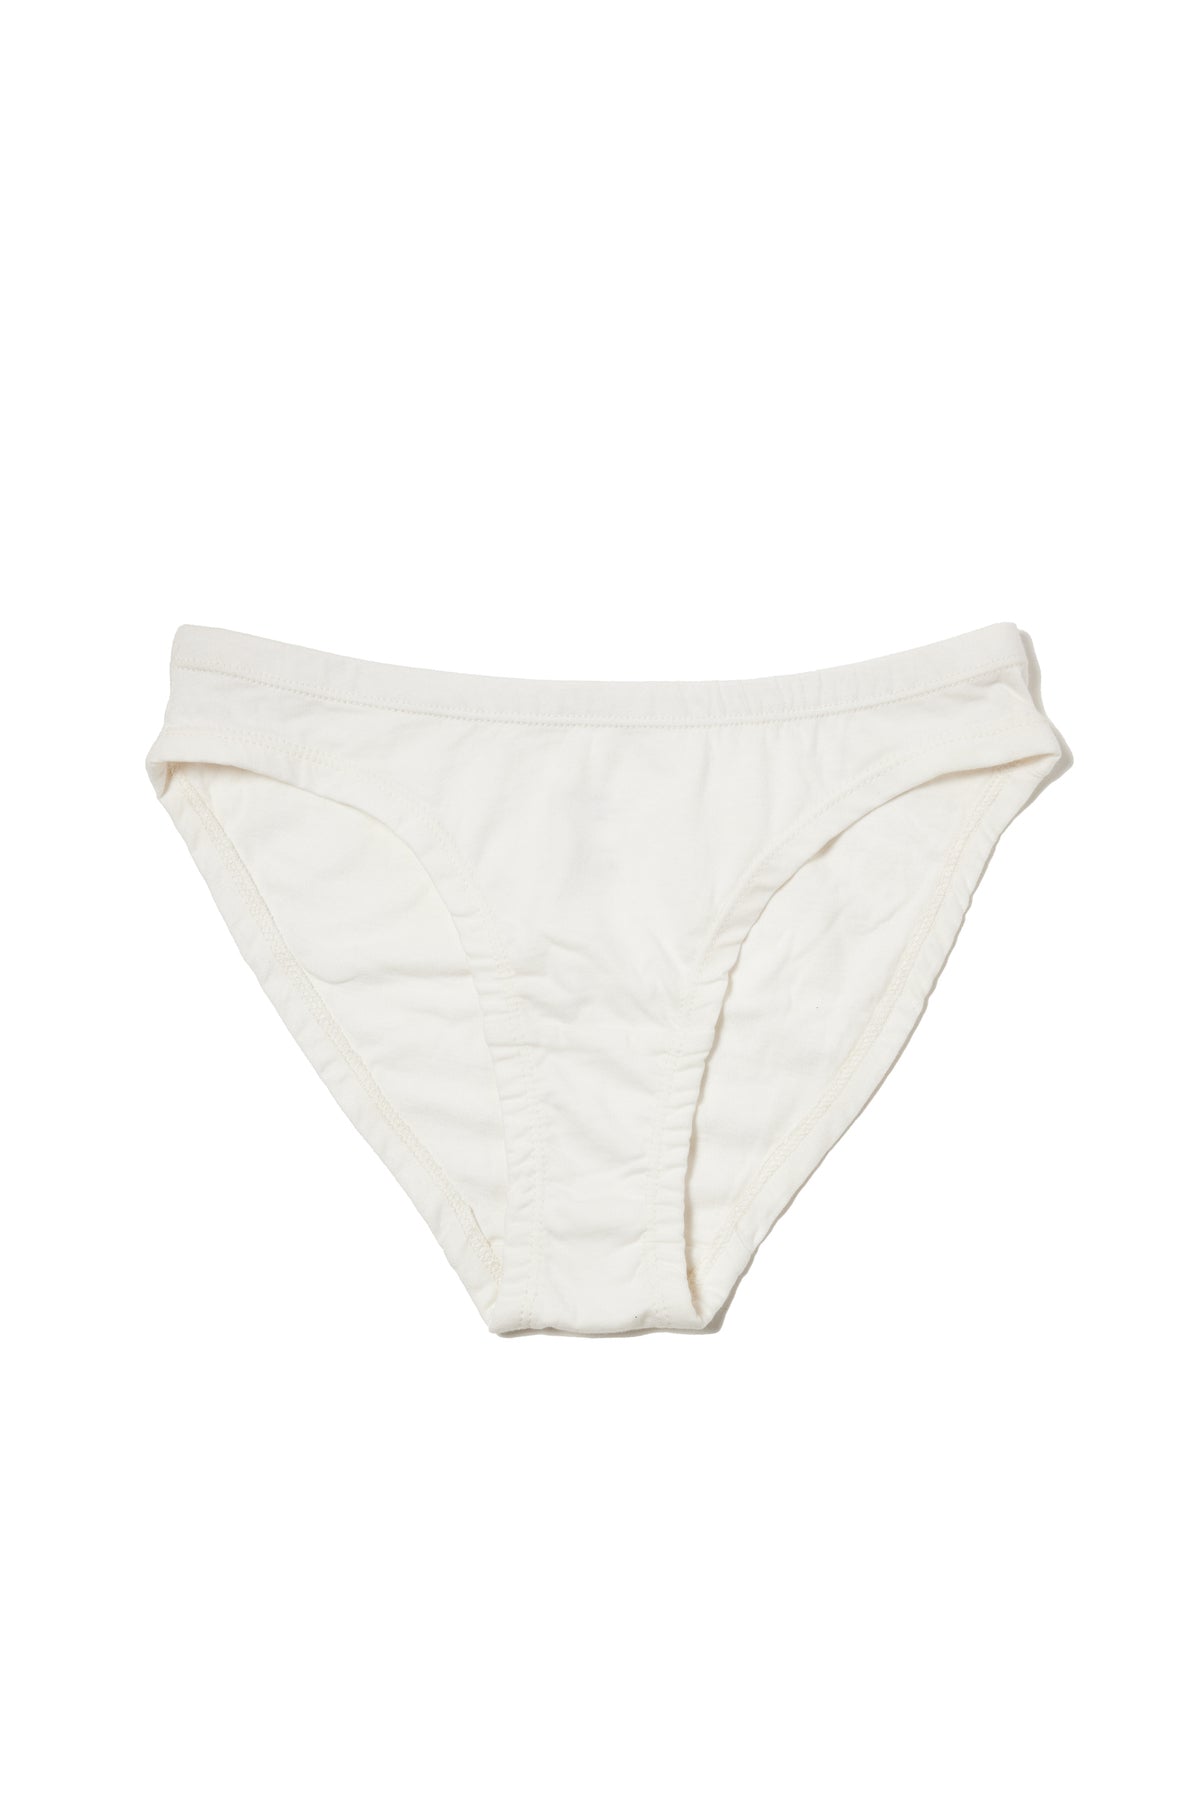 Rovga Panties For Women Females Underwear Cotton Bikini Panties